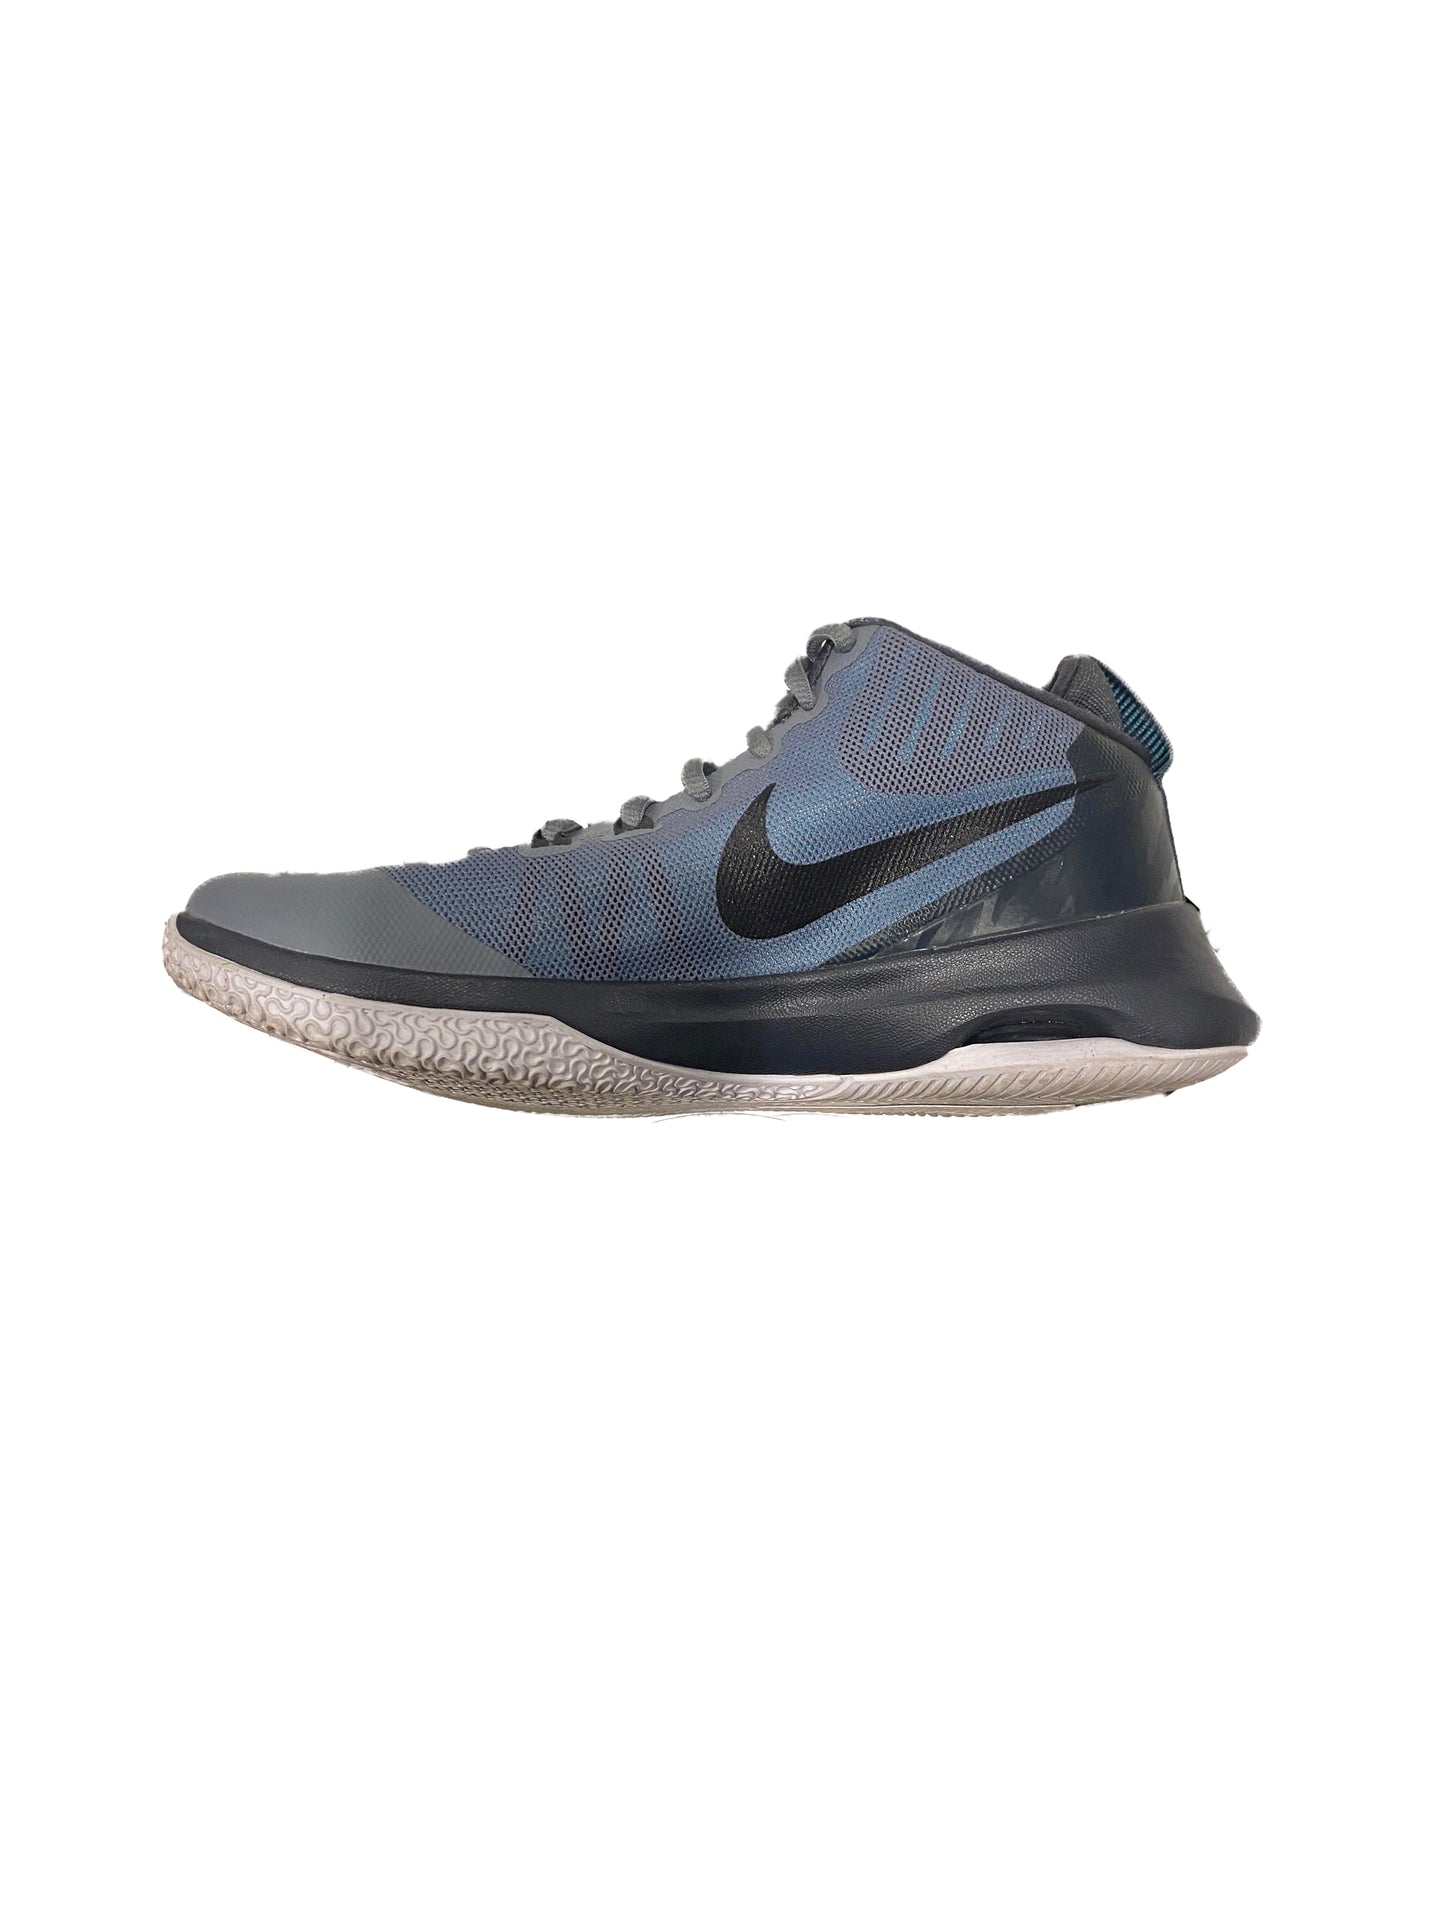 Nike Air Versitile Basketball shoes